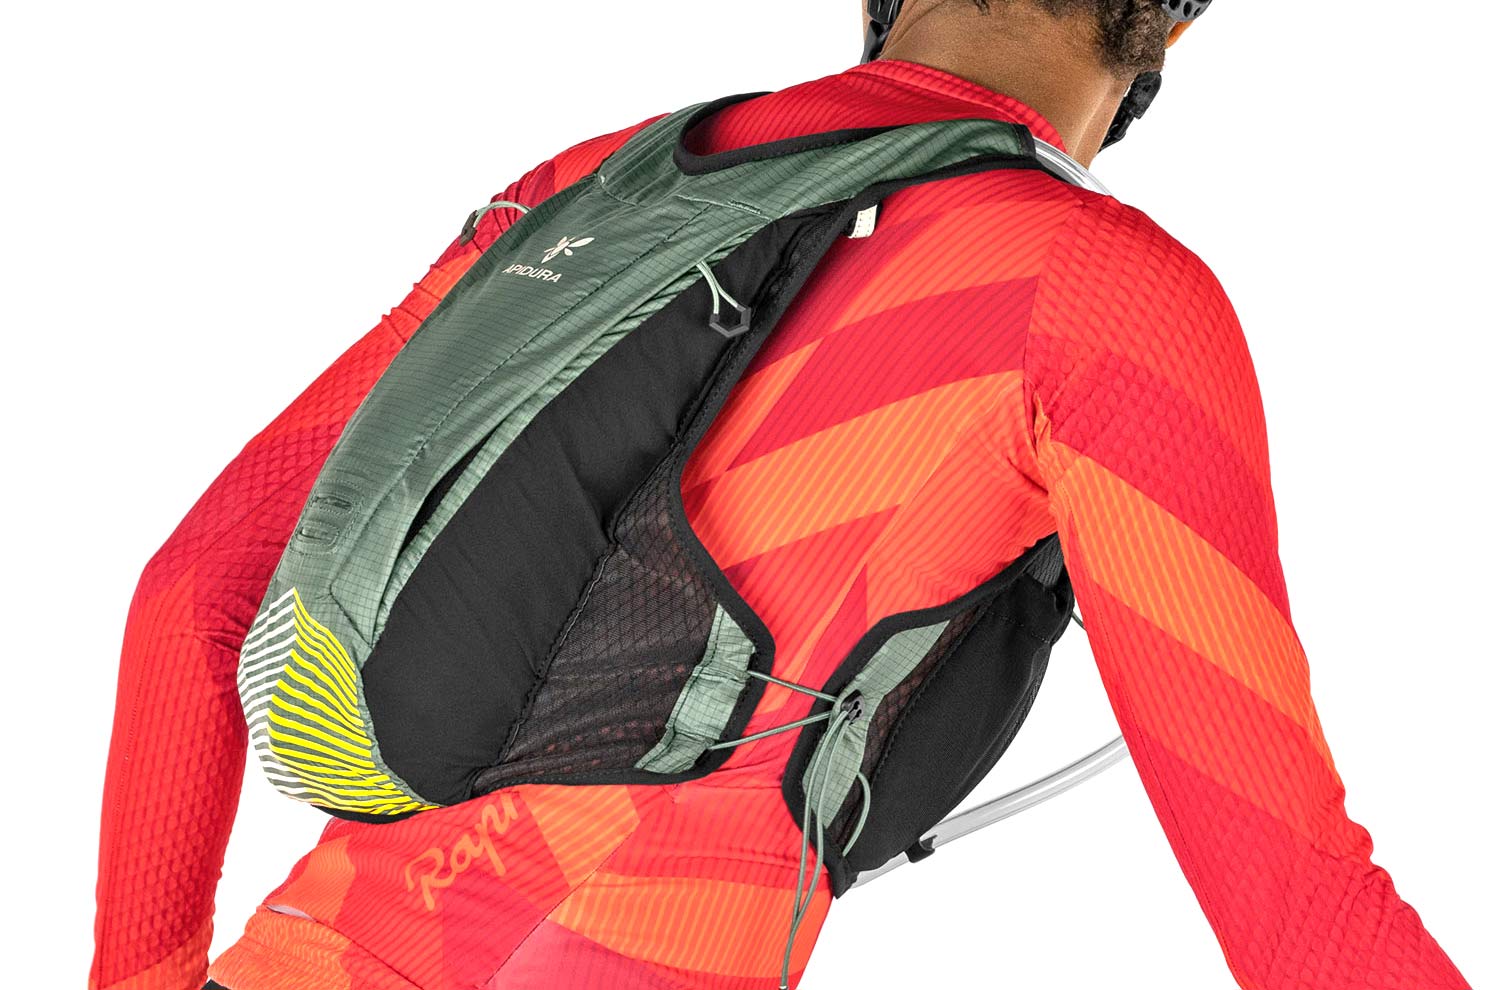 Apidura Racing Hydration Vest lightweight adventure race pack backpack, side detail